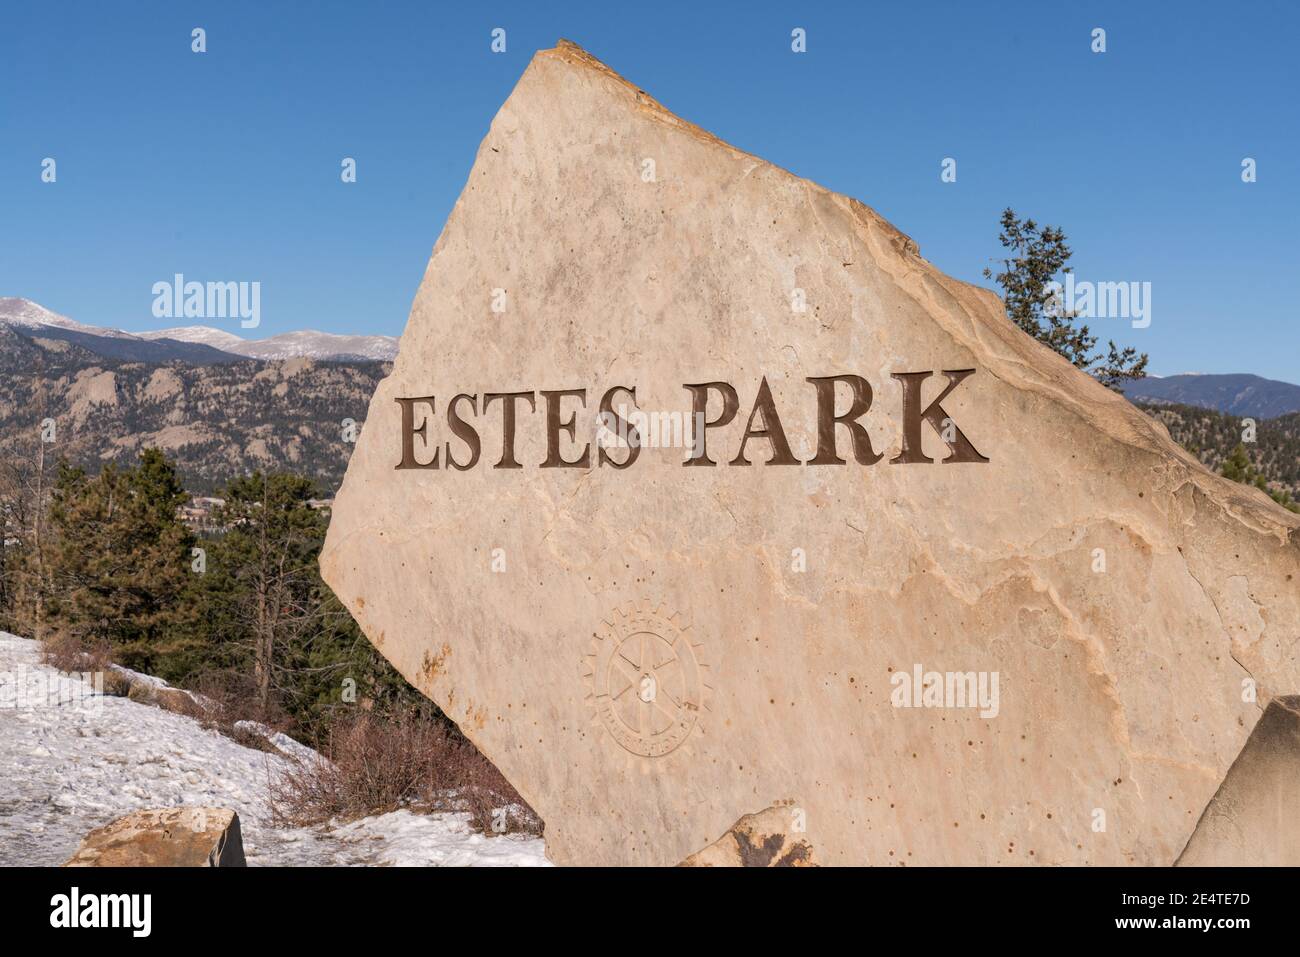 Stone monolith sign on the border of Estes Park along route 36 Stock Photo